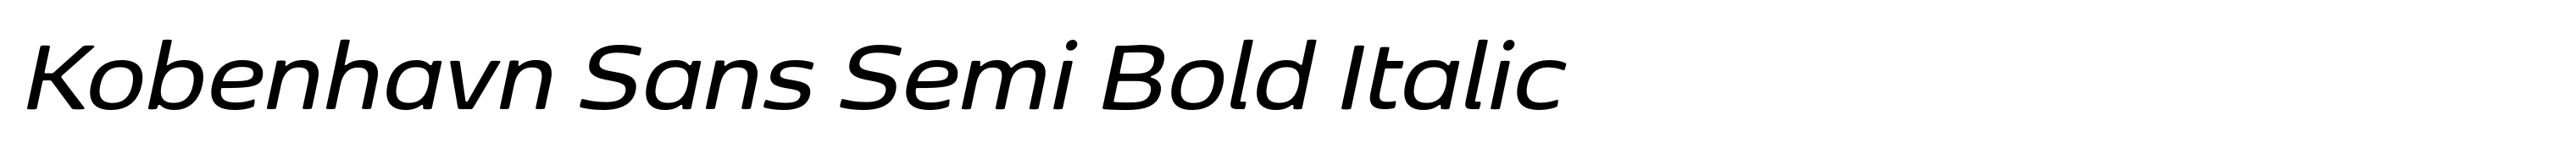 Kobenhavn Sans Semi Bold Italic